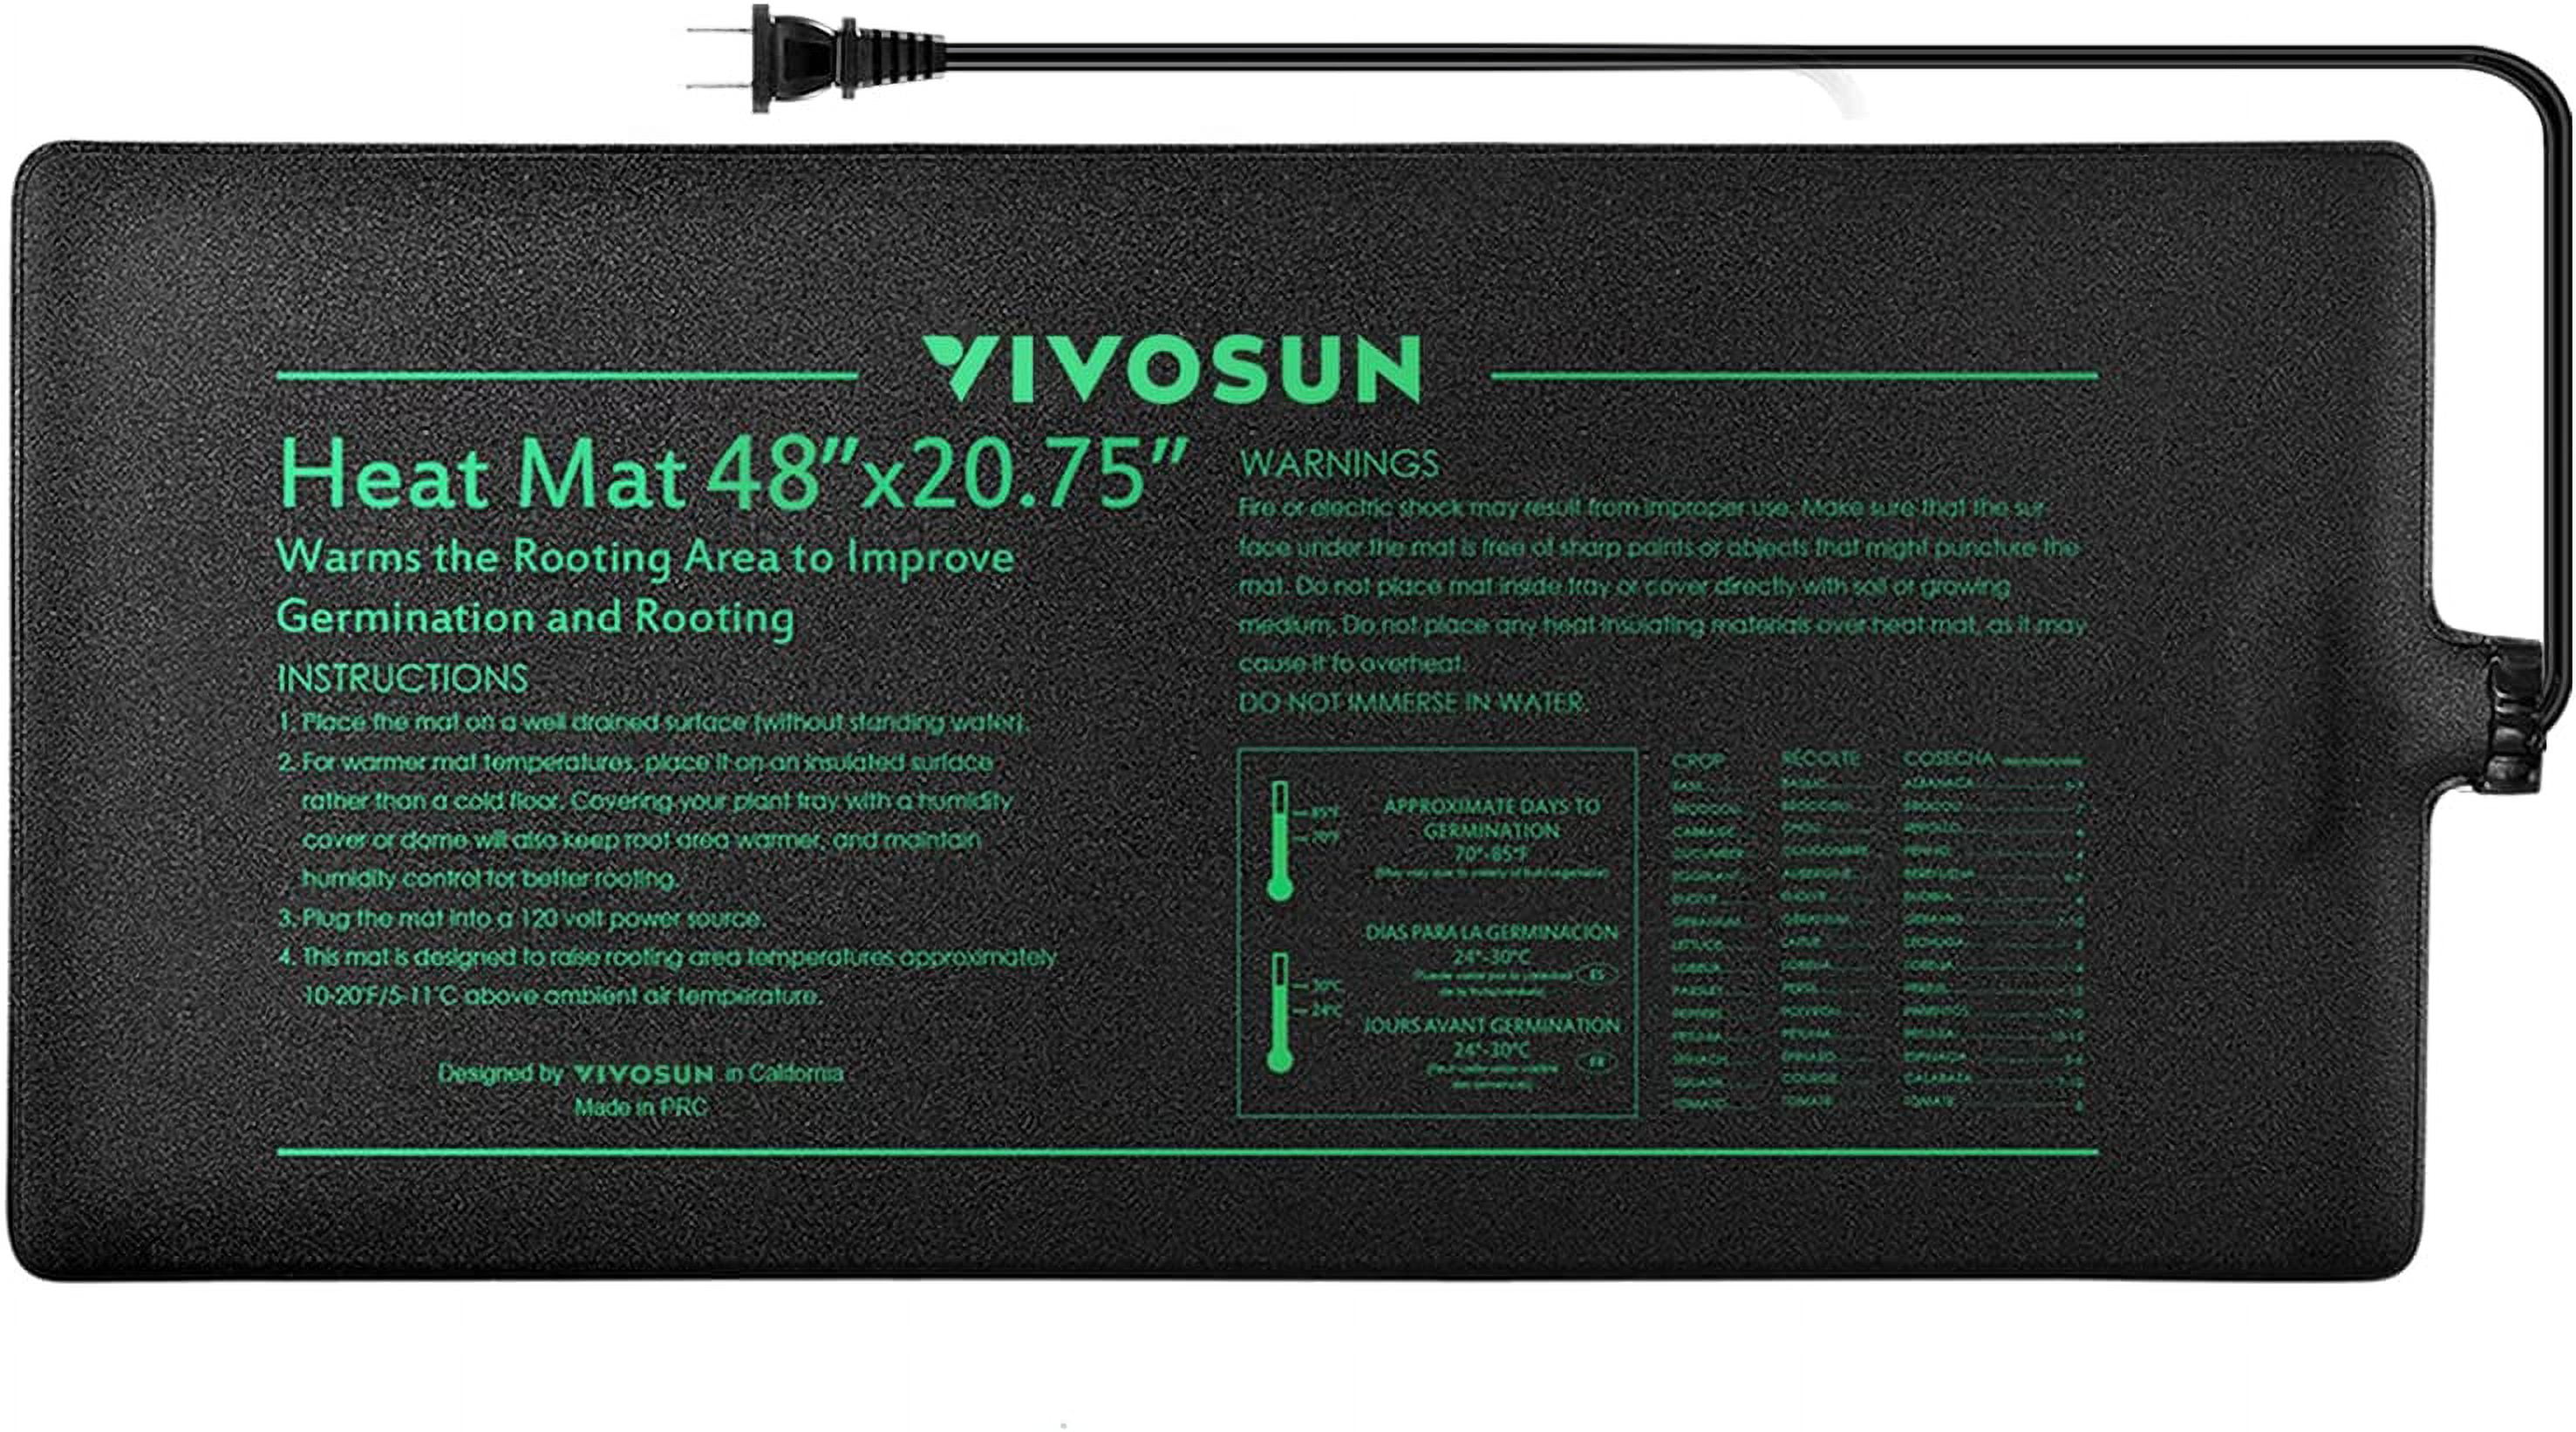 Urban Worm Bag Warmer/Seed Starting Mat by Vivosun - Urban Worm Company